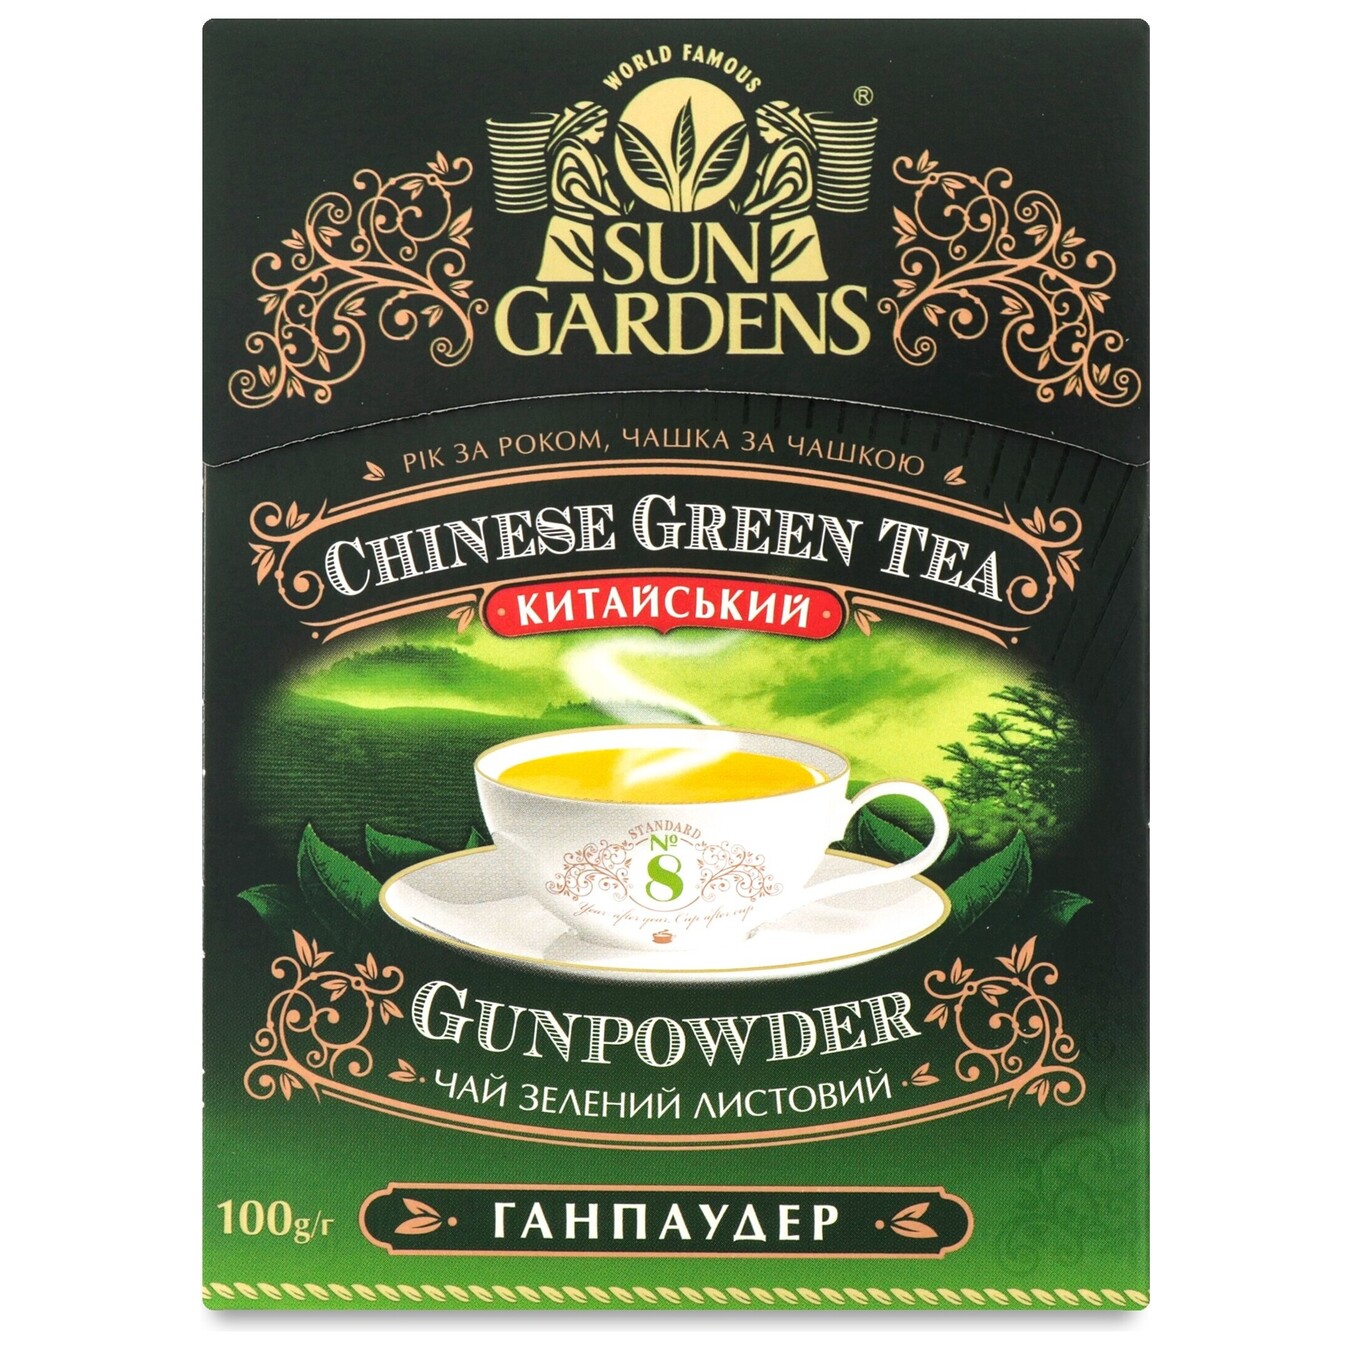 Green pekoe tea Sun Gardens Old Green Gardens Gunpowder 100g